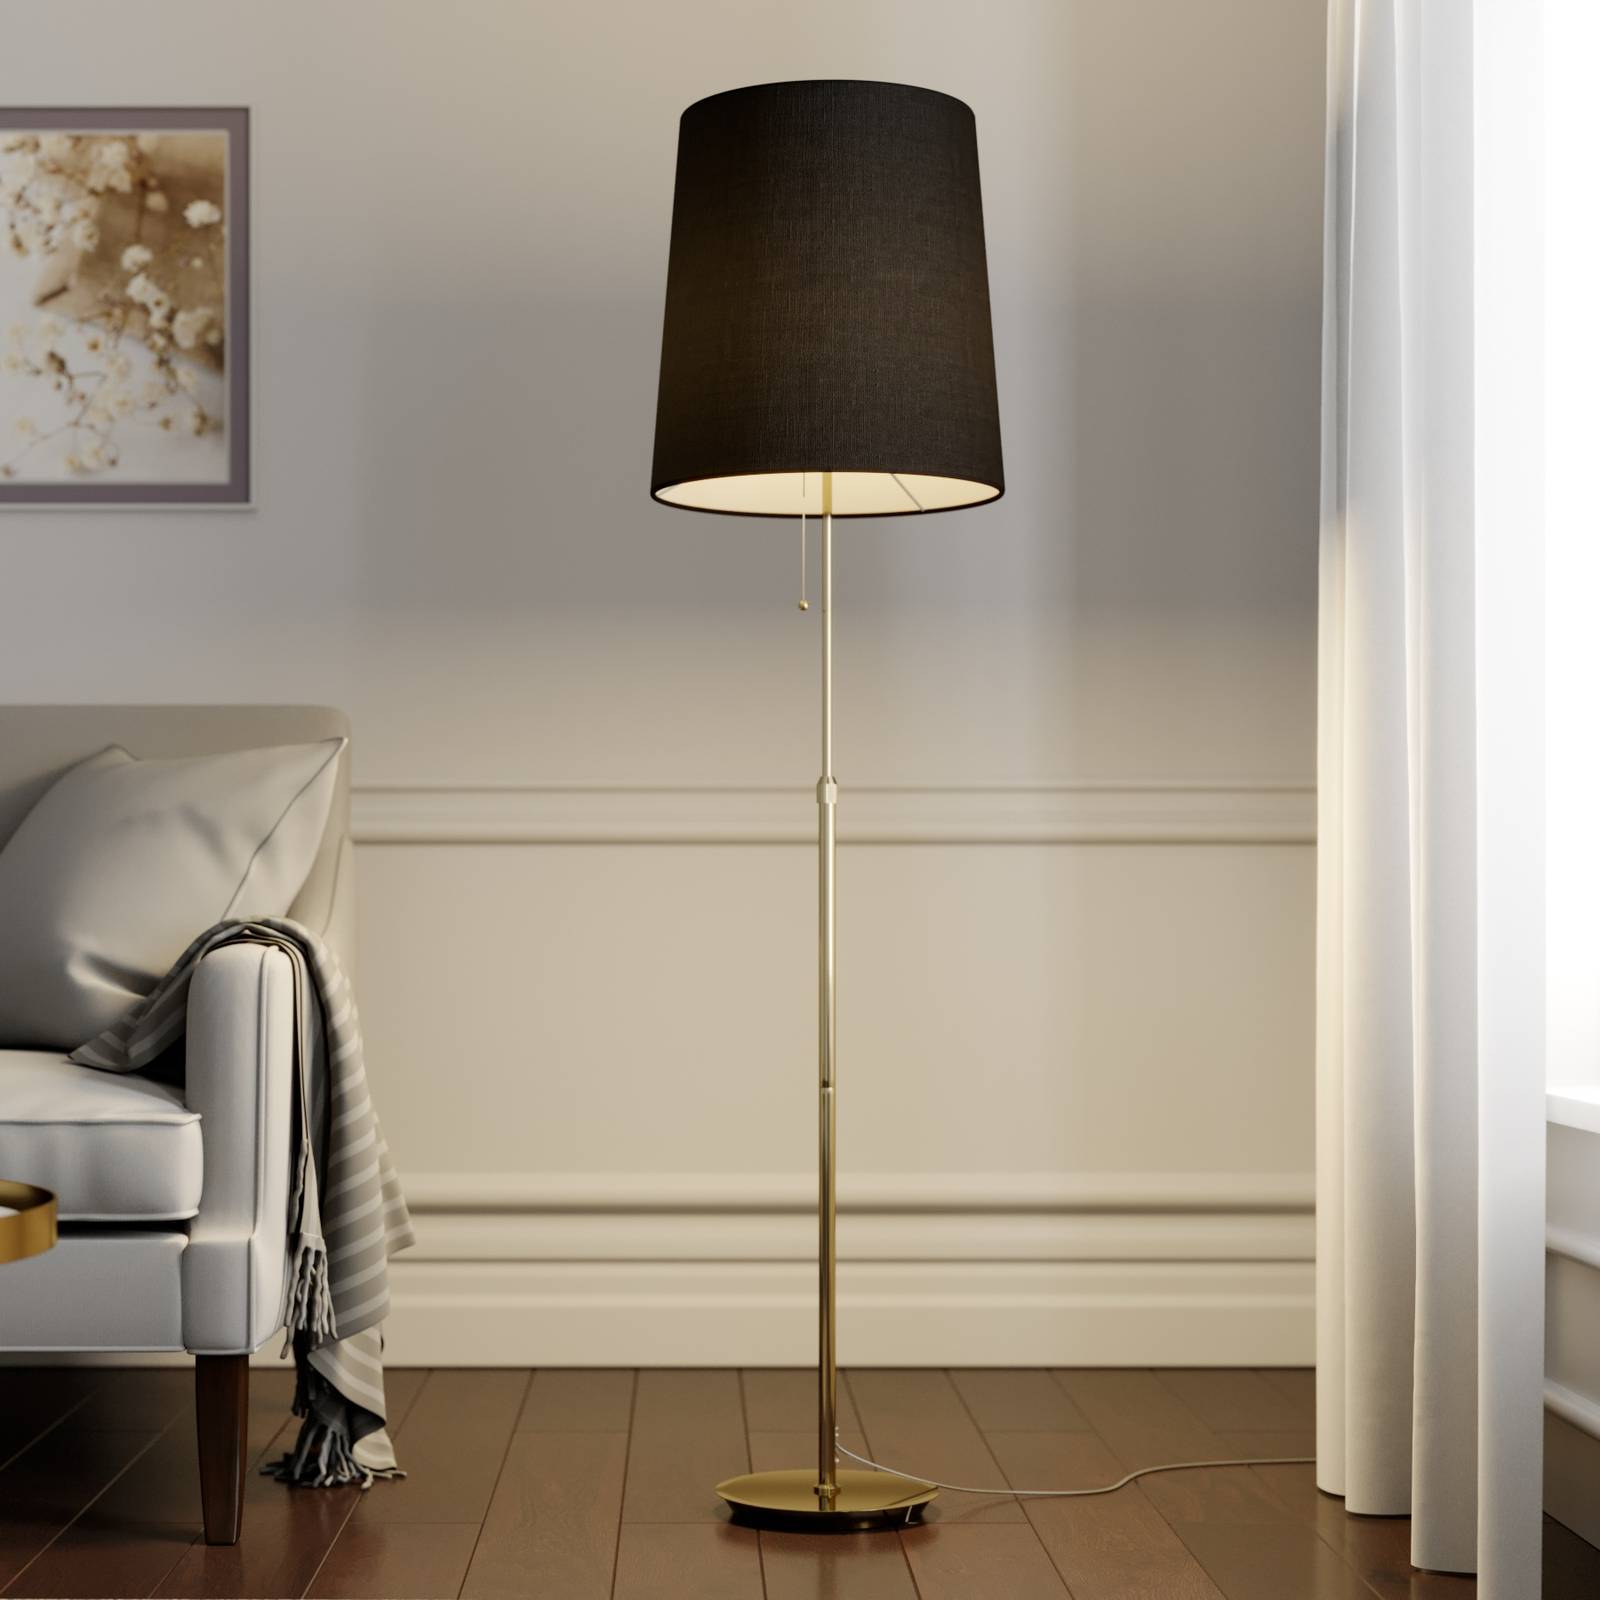 Lucande Pordis floor lamp, 155 cm, brass and gold